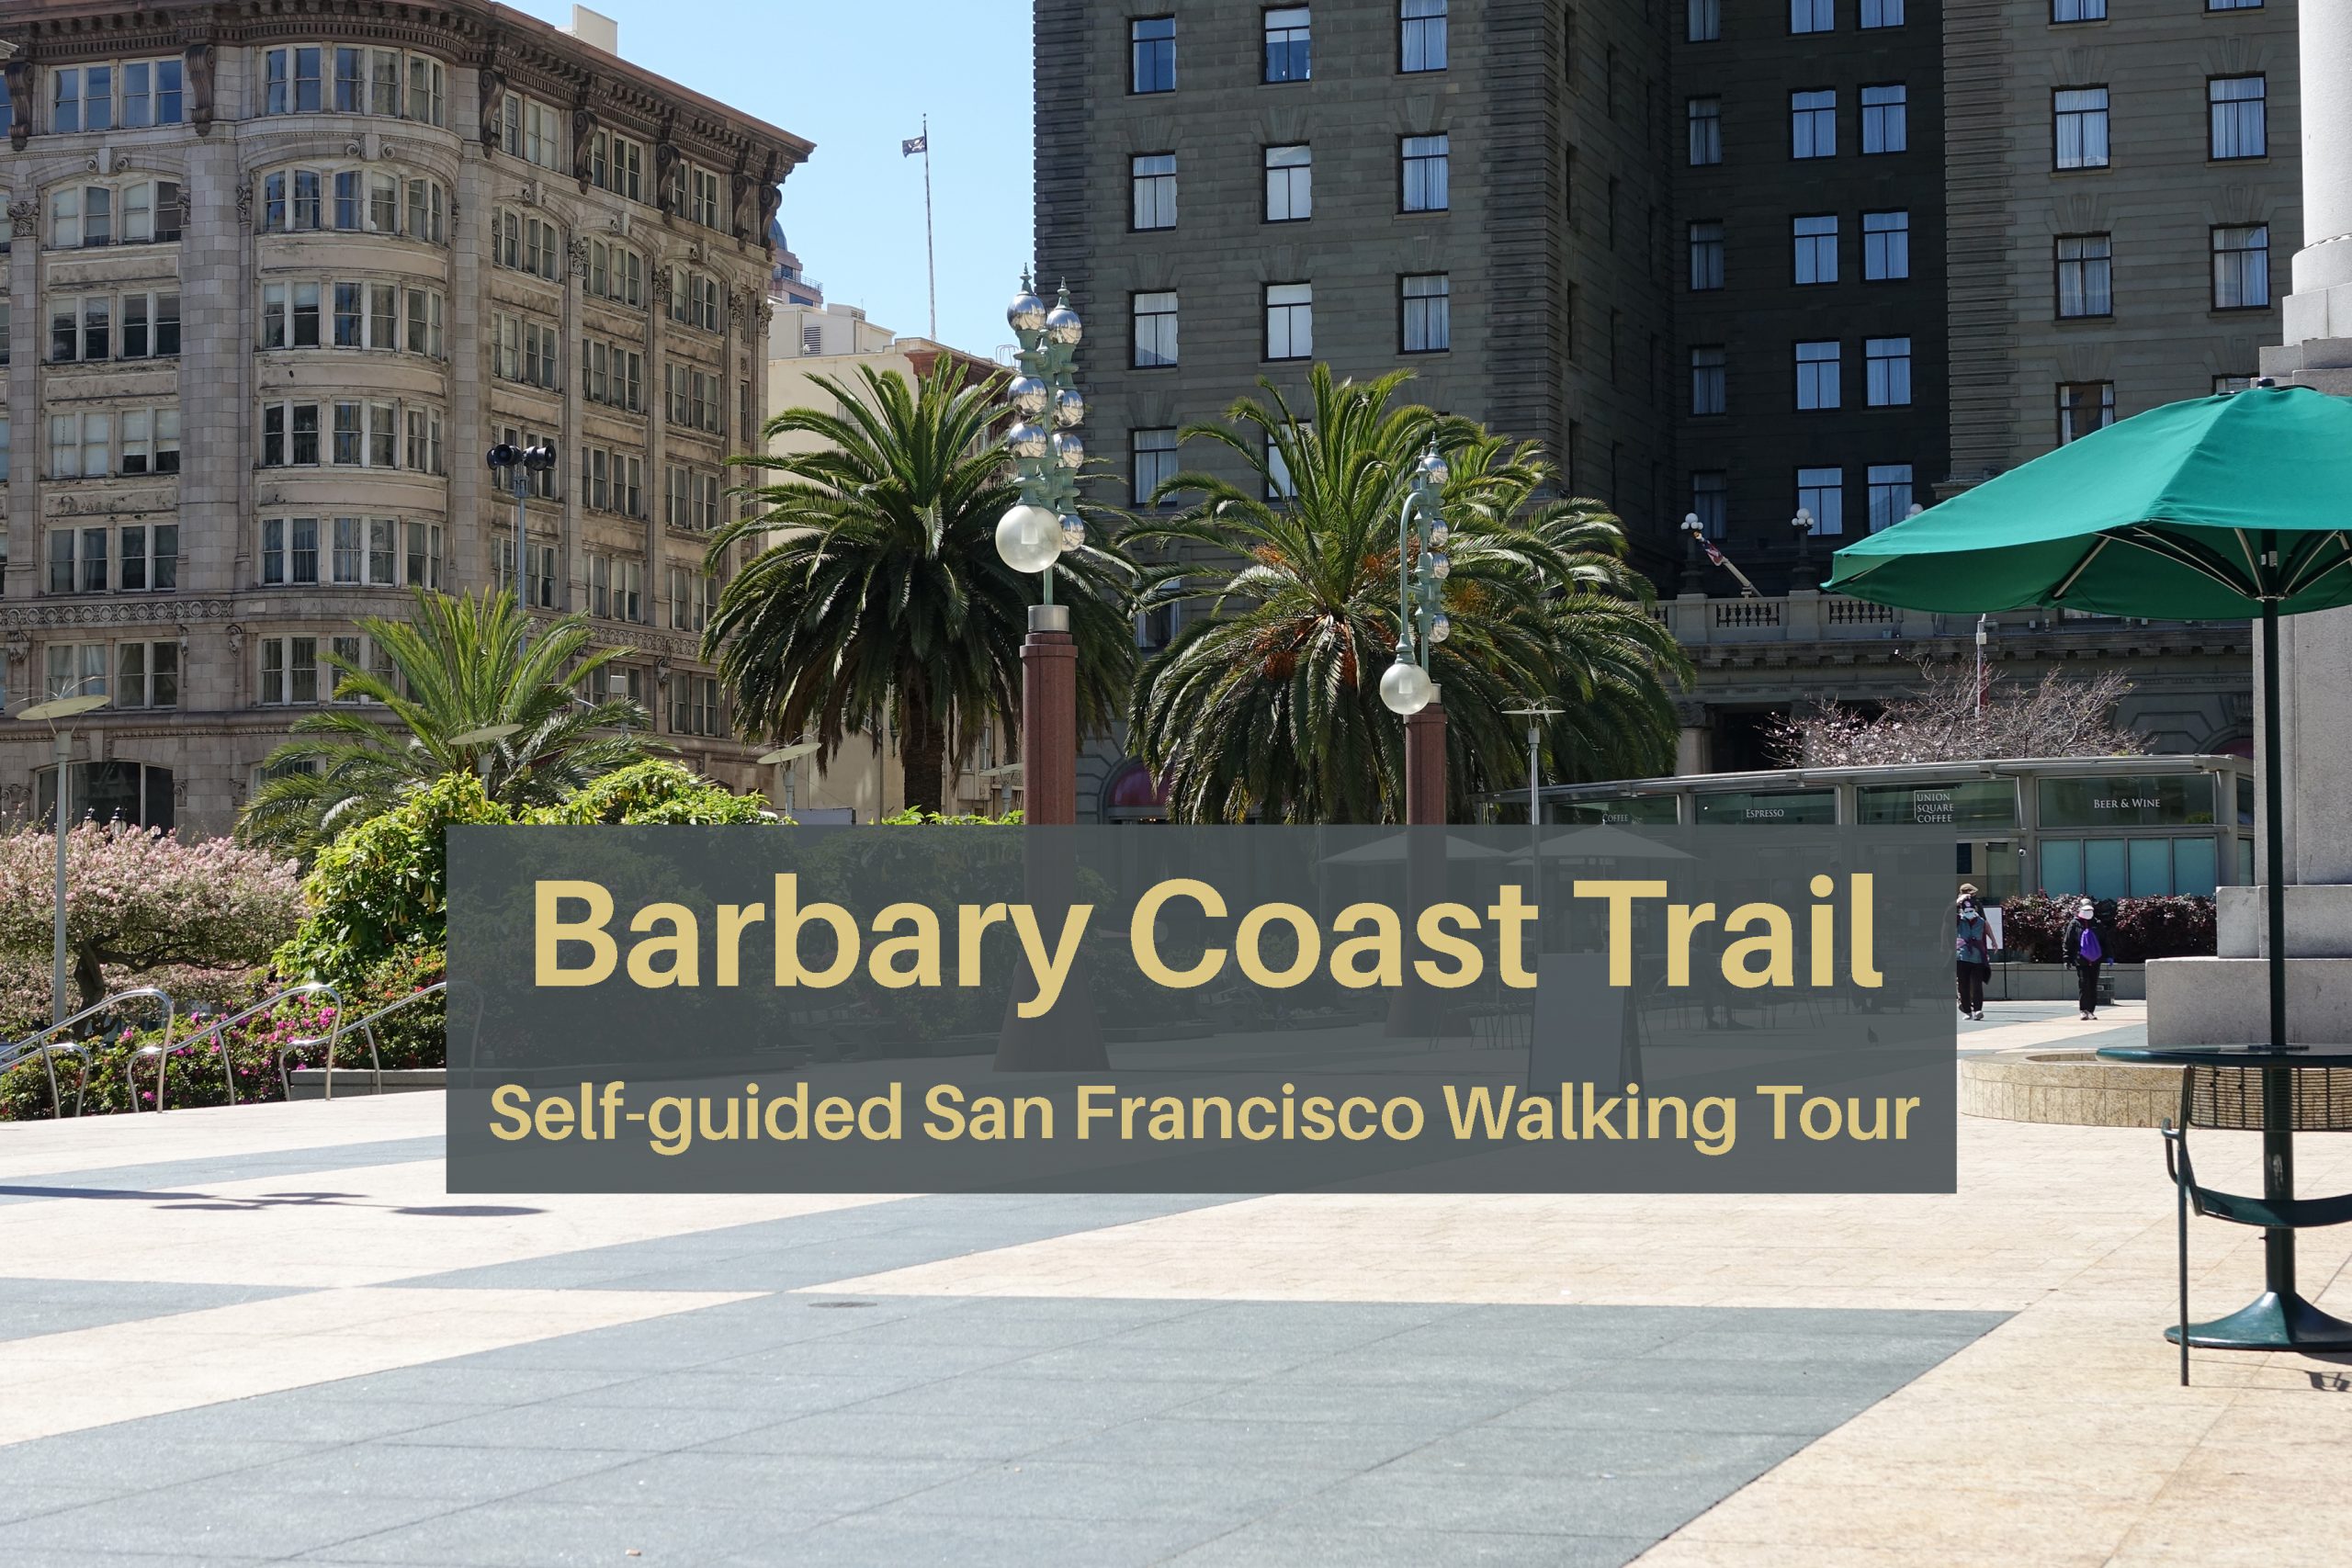 Barbary Coast Trail self-guided walking tour of san Francisco.